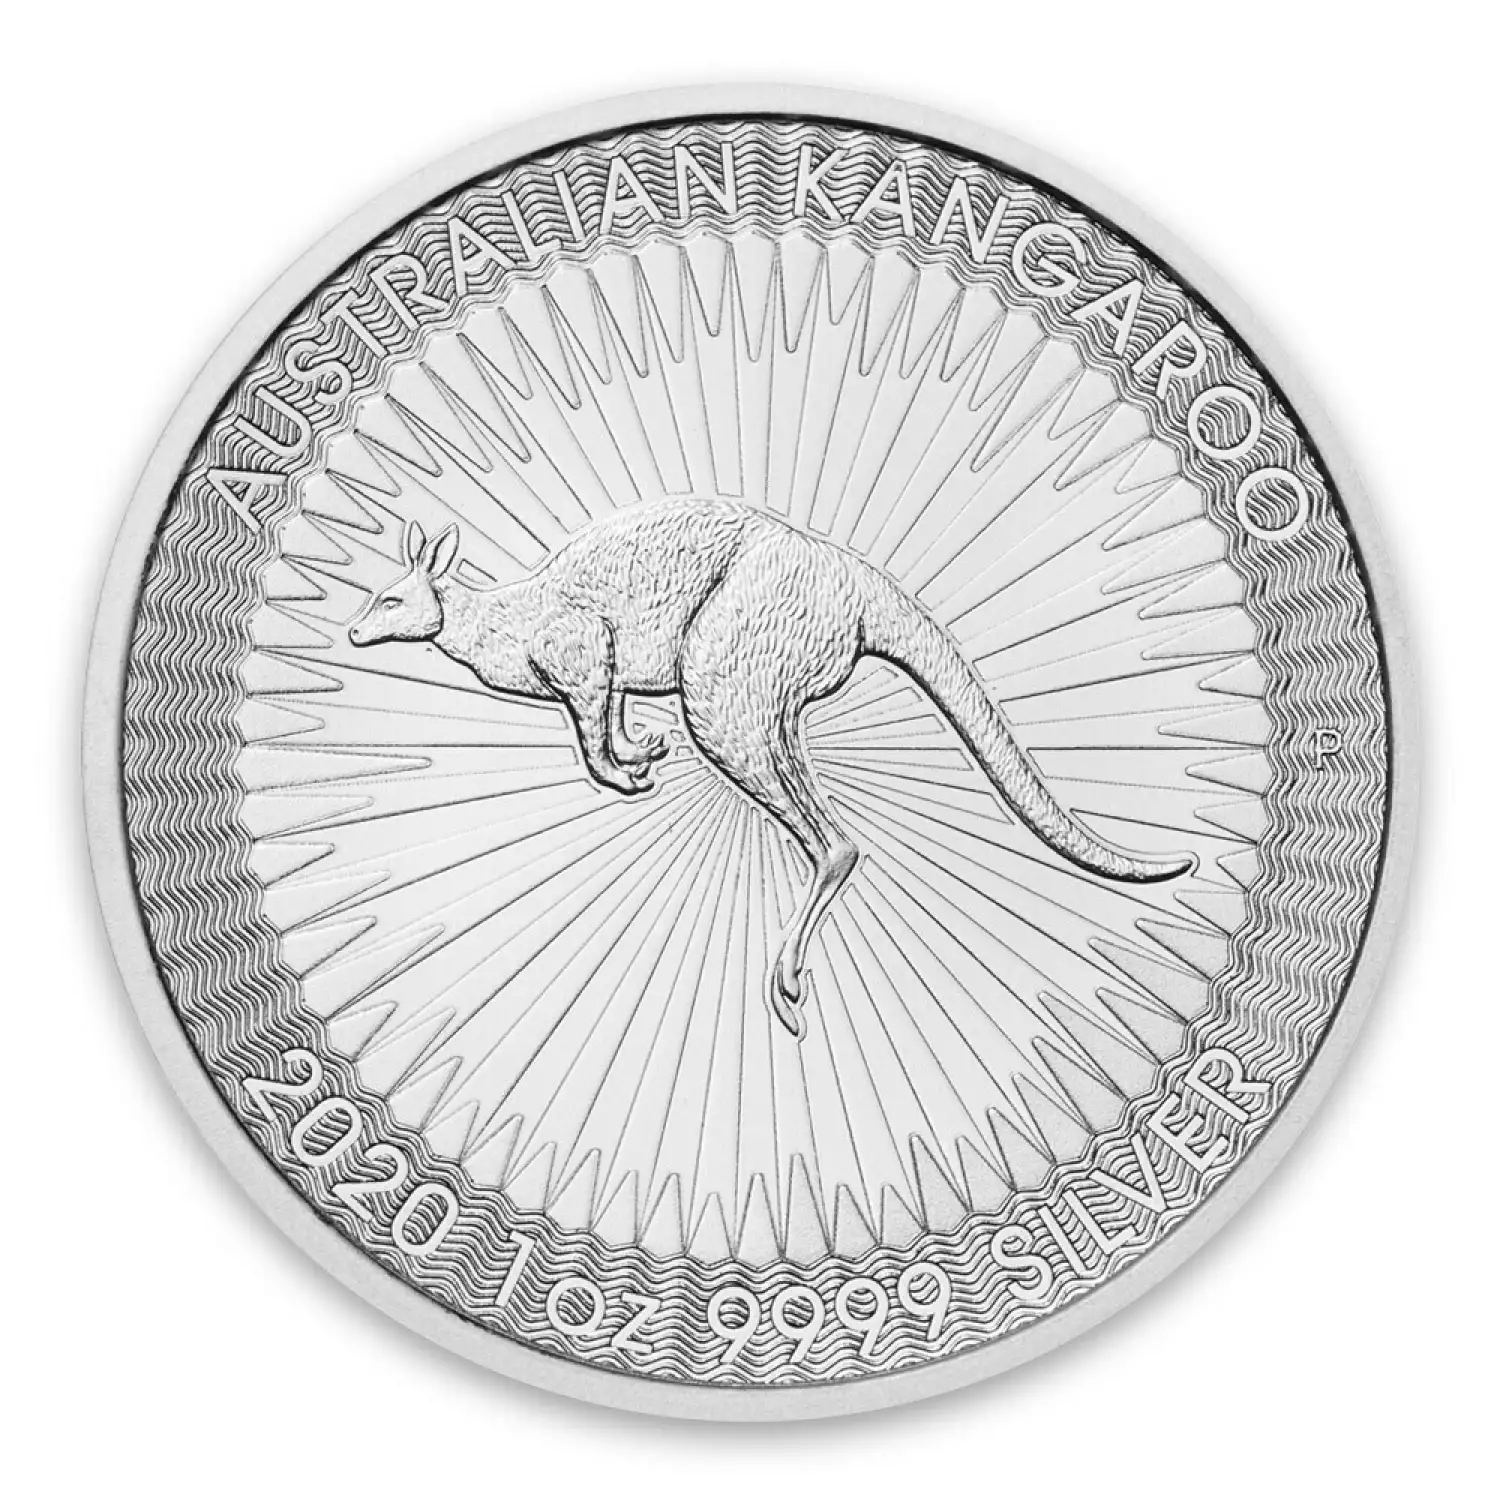 2020 1oz Australian Perth Mint Silver Kangaroo (2)